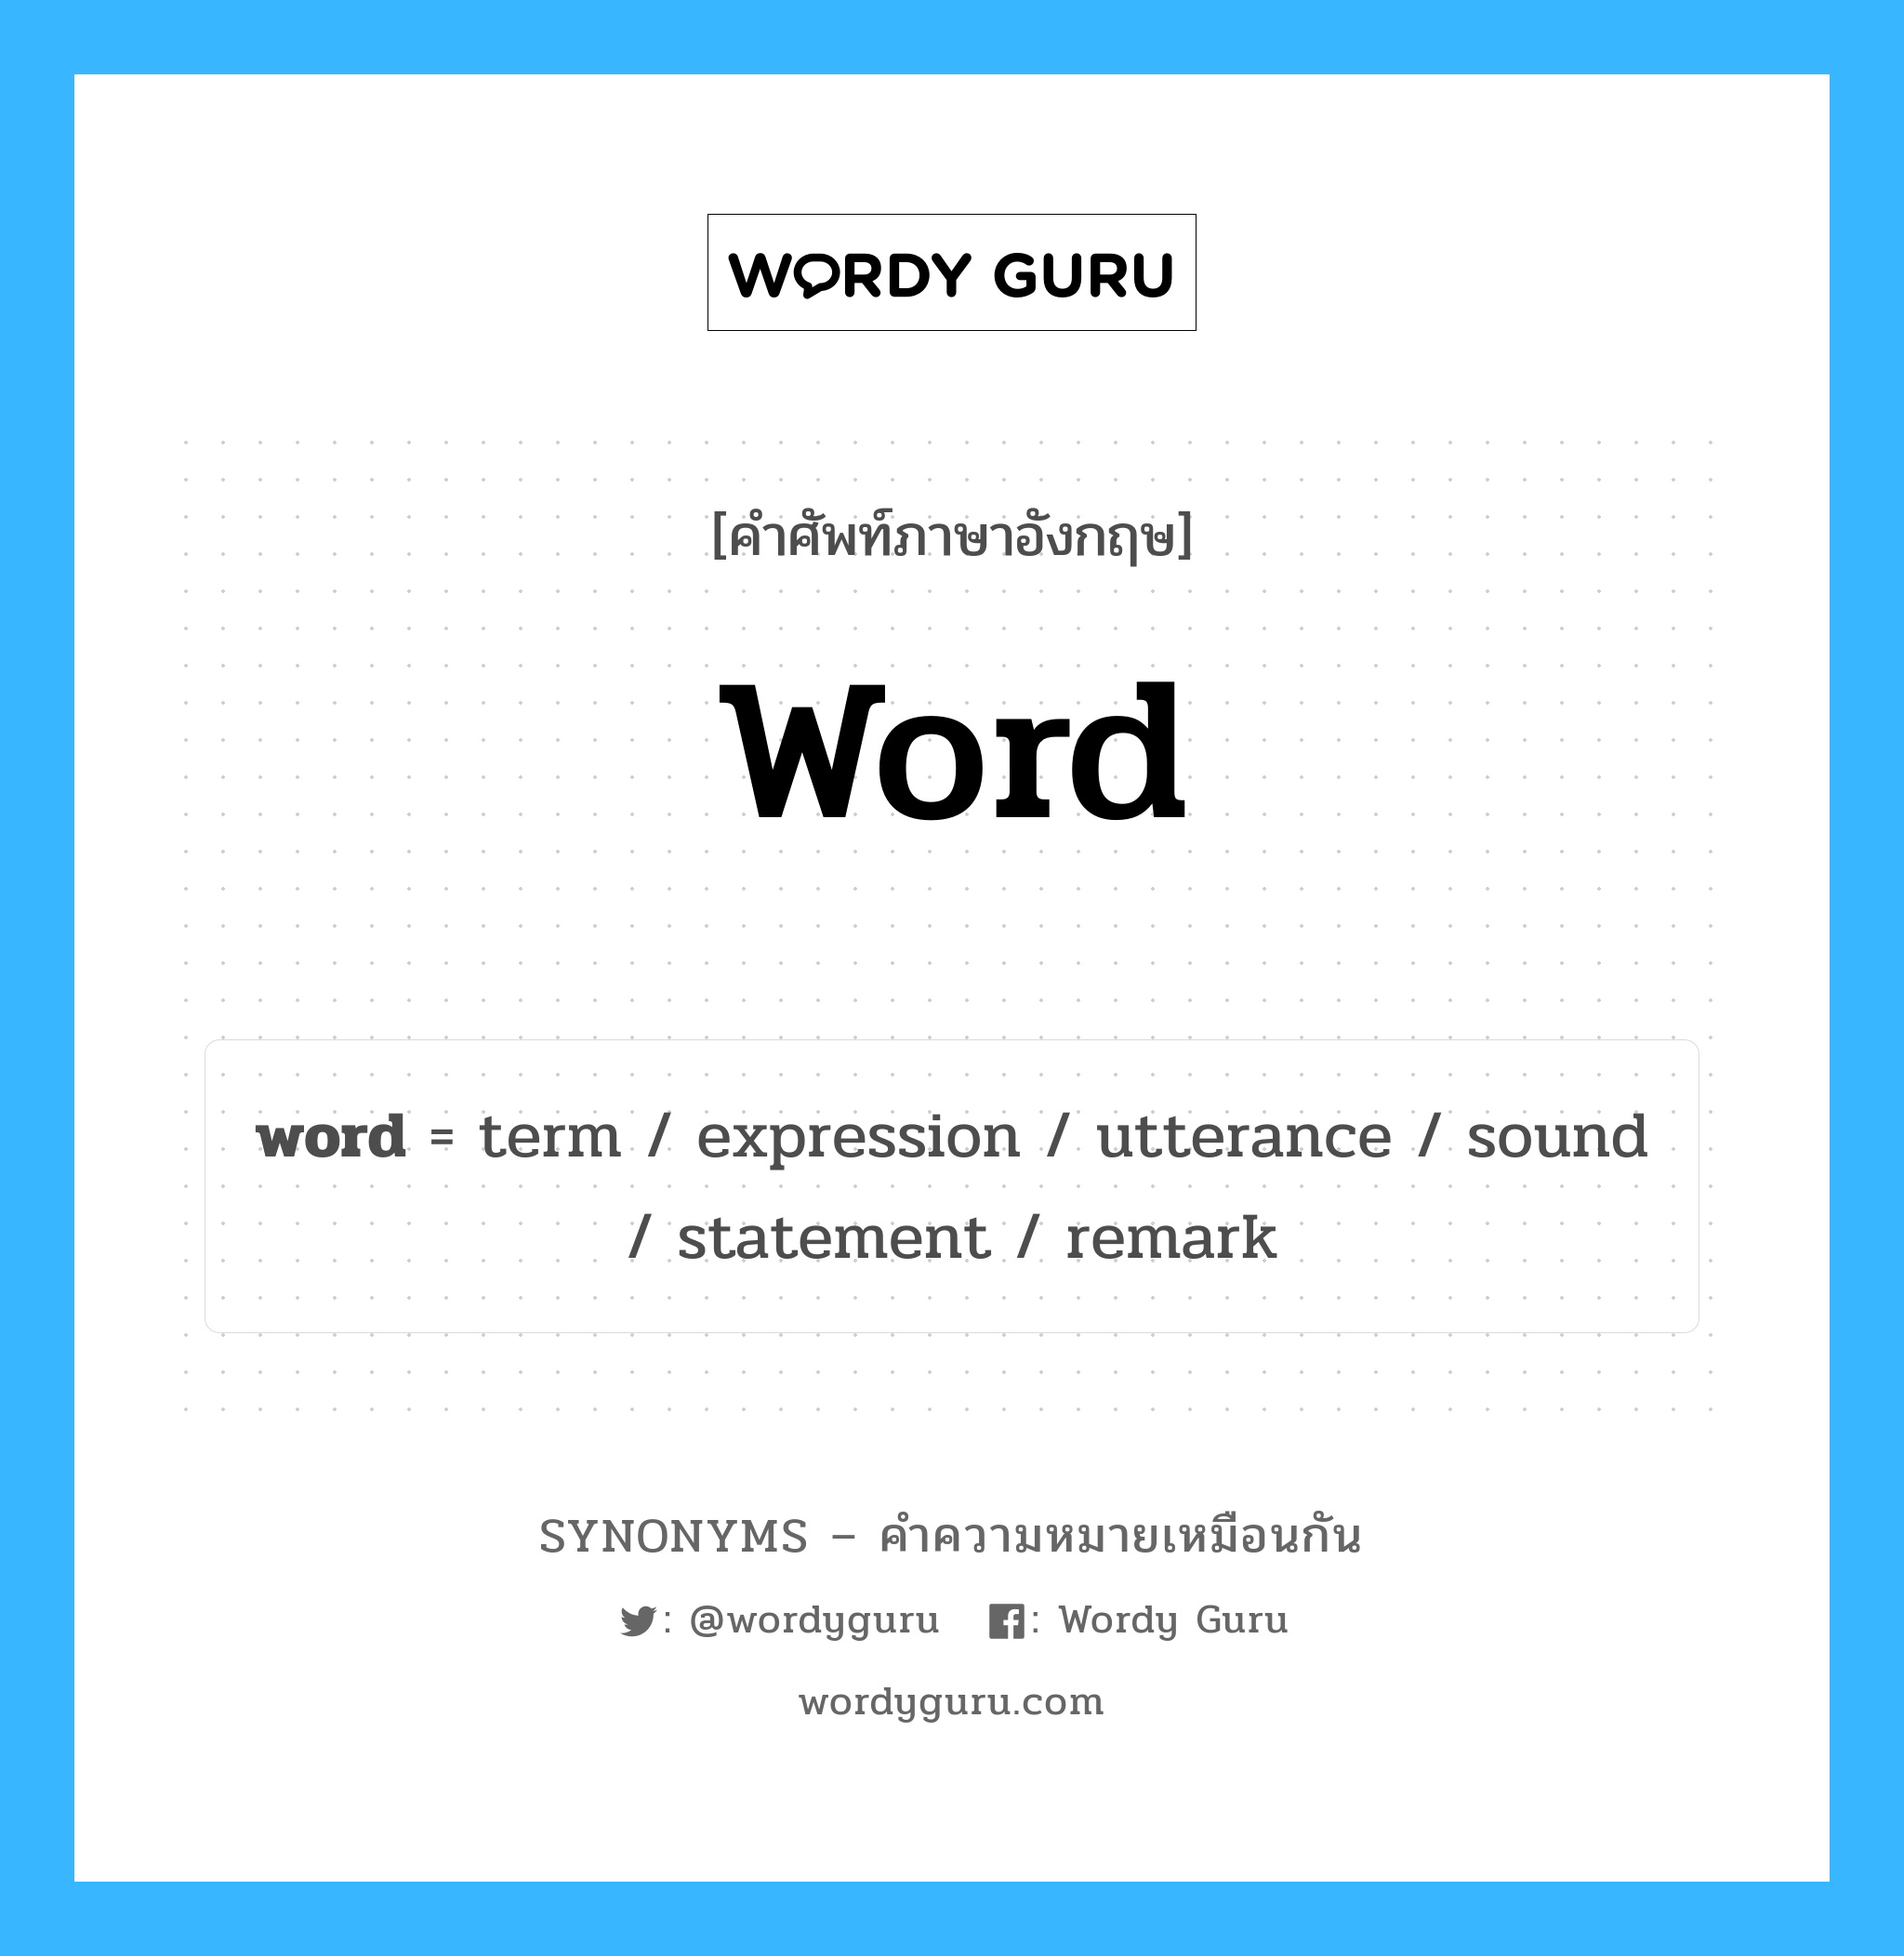 term เป็นหนึ่งใน word และมีคำอื่น ๆ อีกดังนี้, คำศัพท์ภาษาอังกฤษ term ความหมายคล้ายกันกับ word แปลว่า ระยะ หมวด word